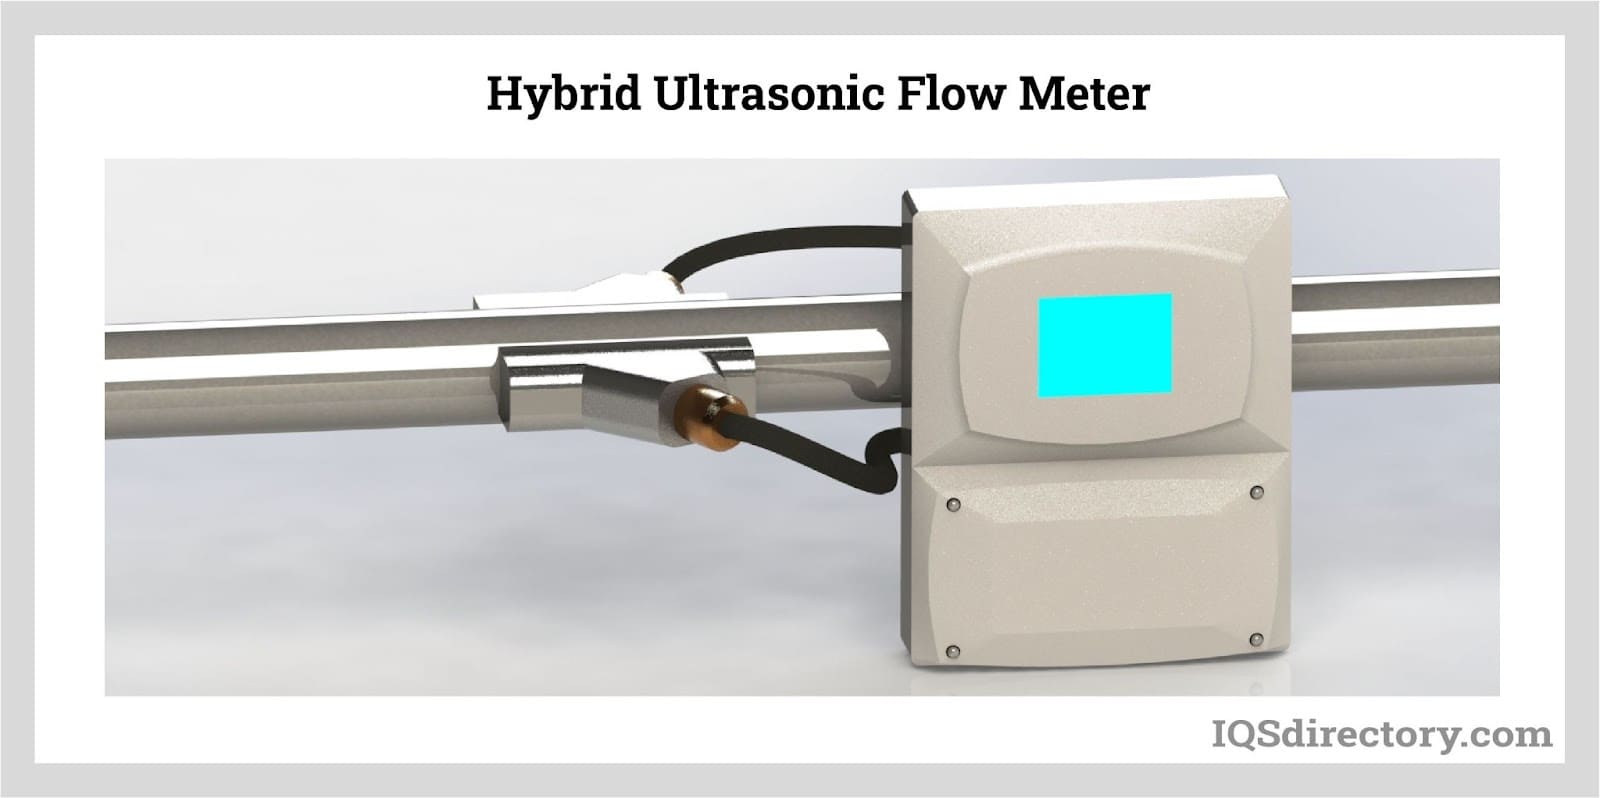 Hybrid Ultrasonic Flow Meter